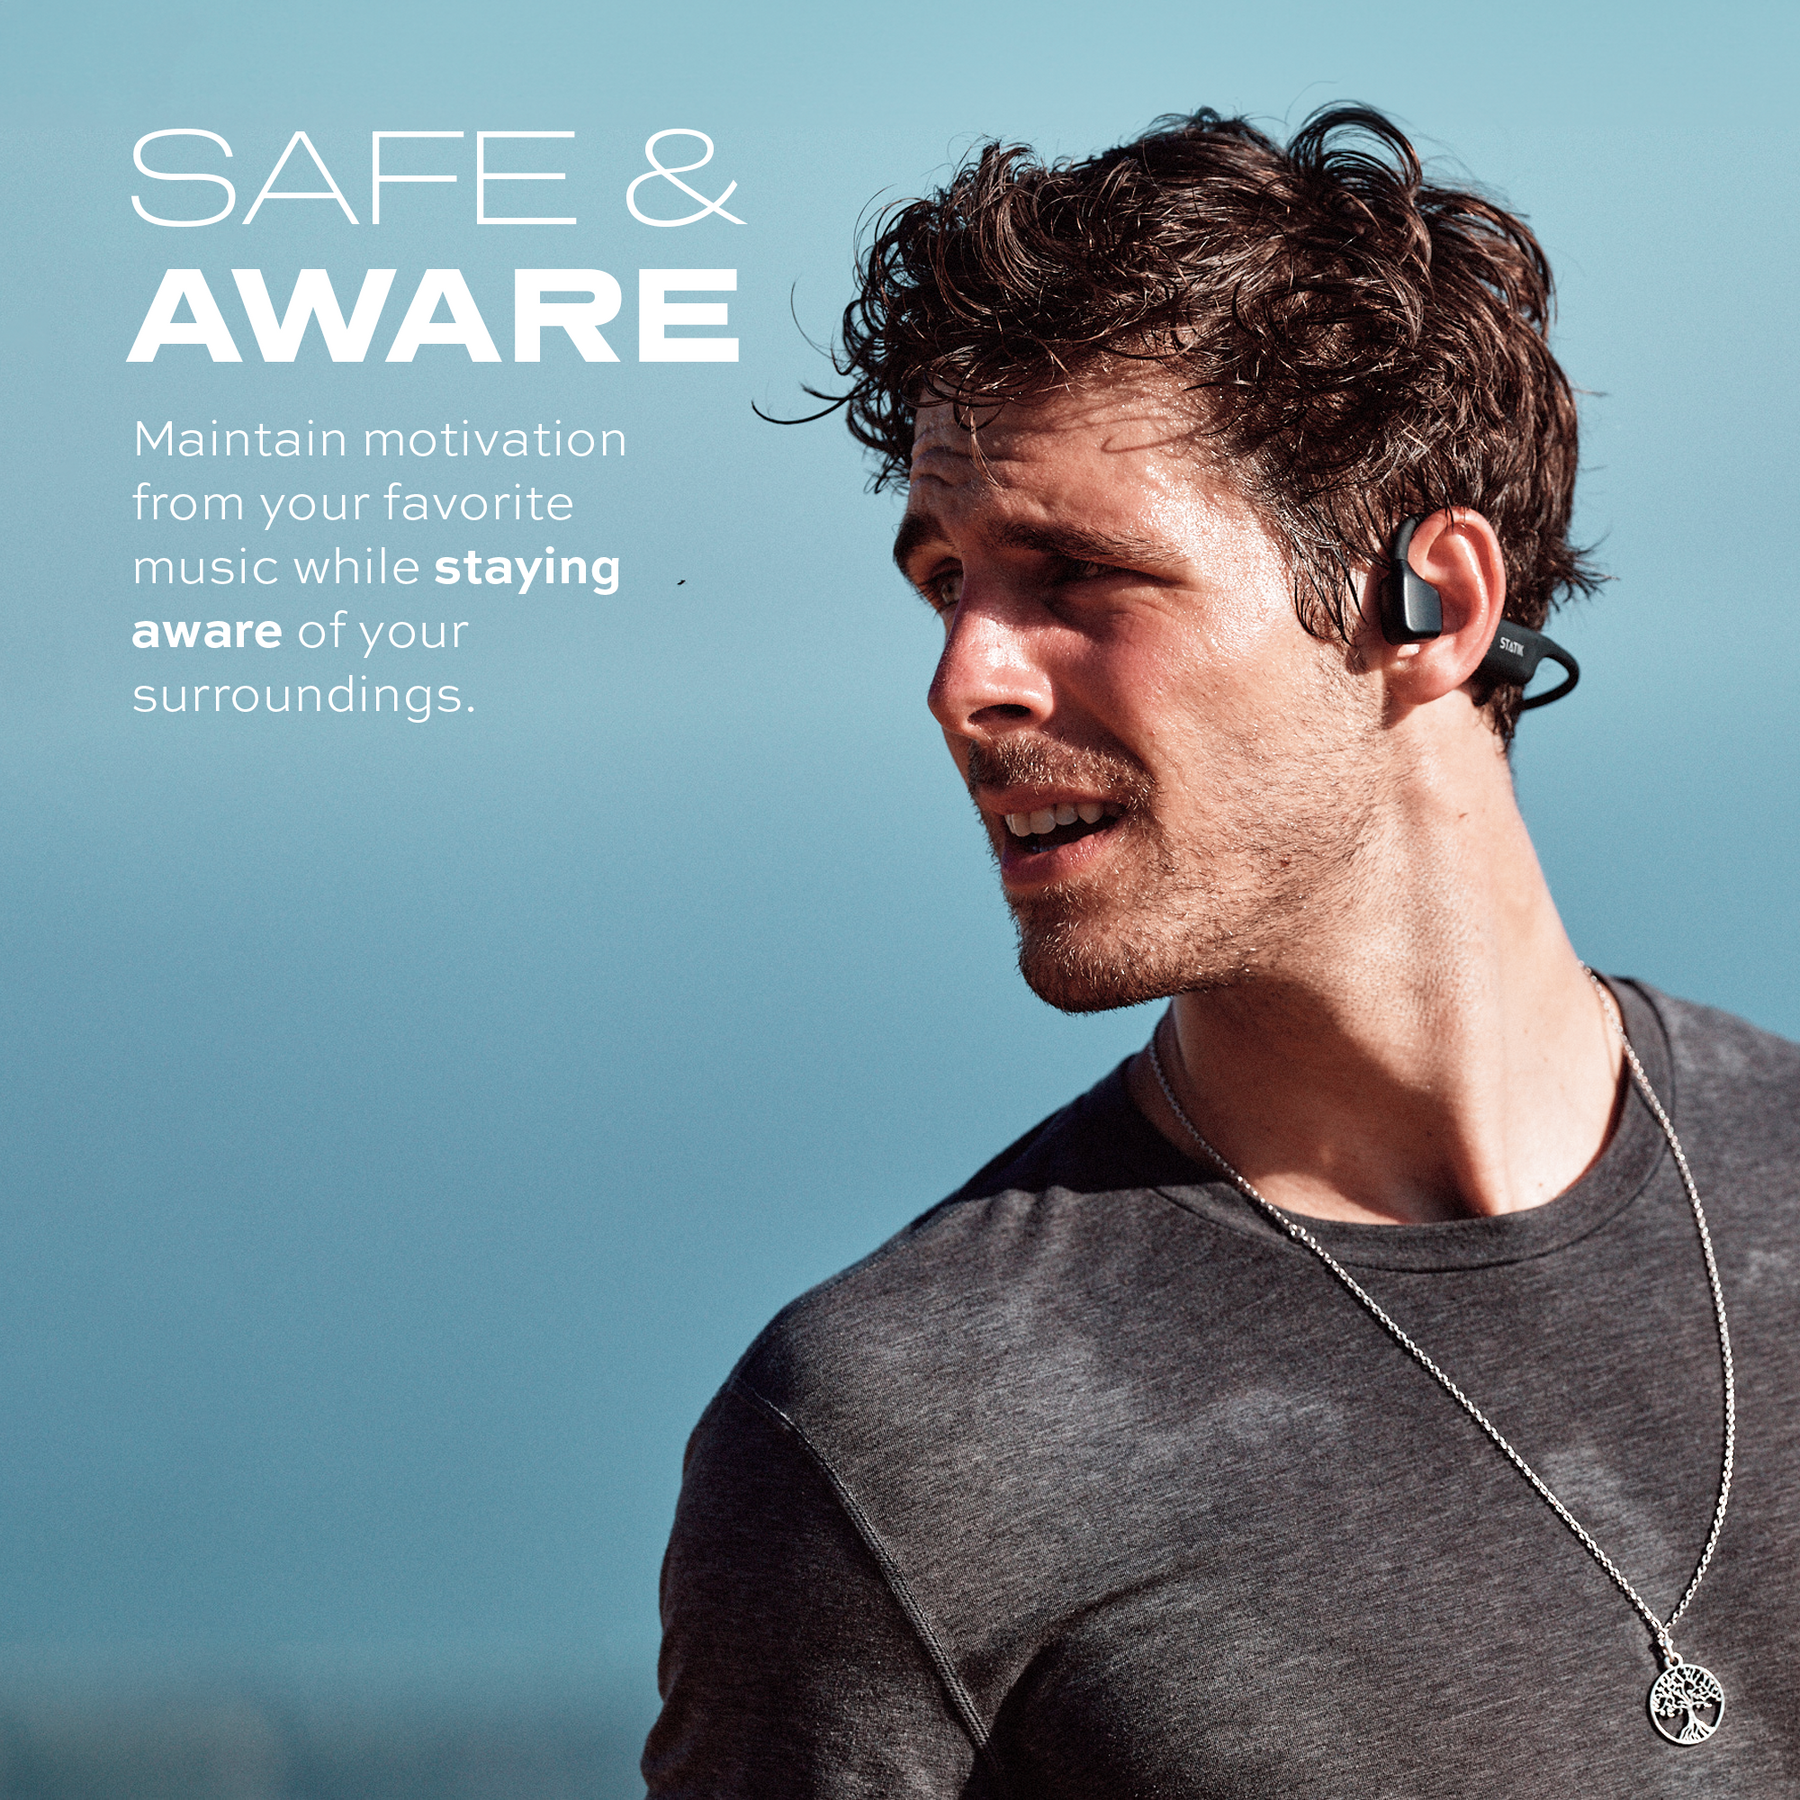 Statik® Aktive | Open Ear Headphones